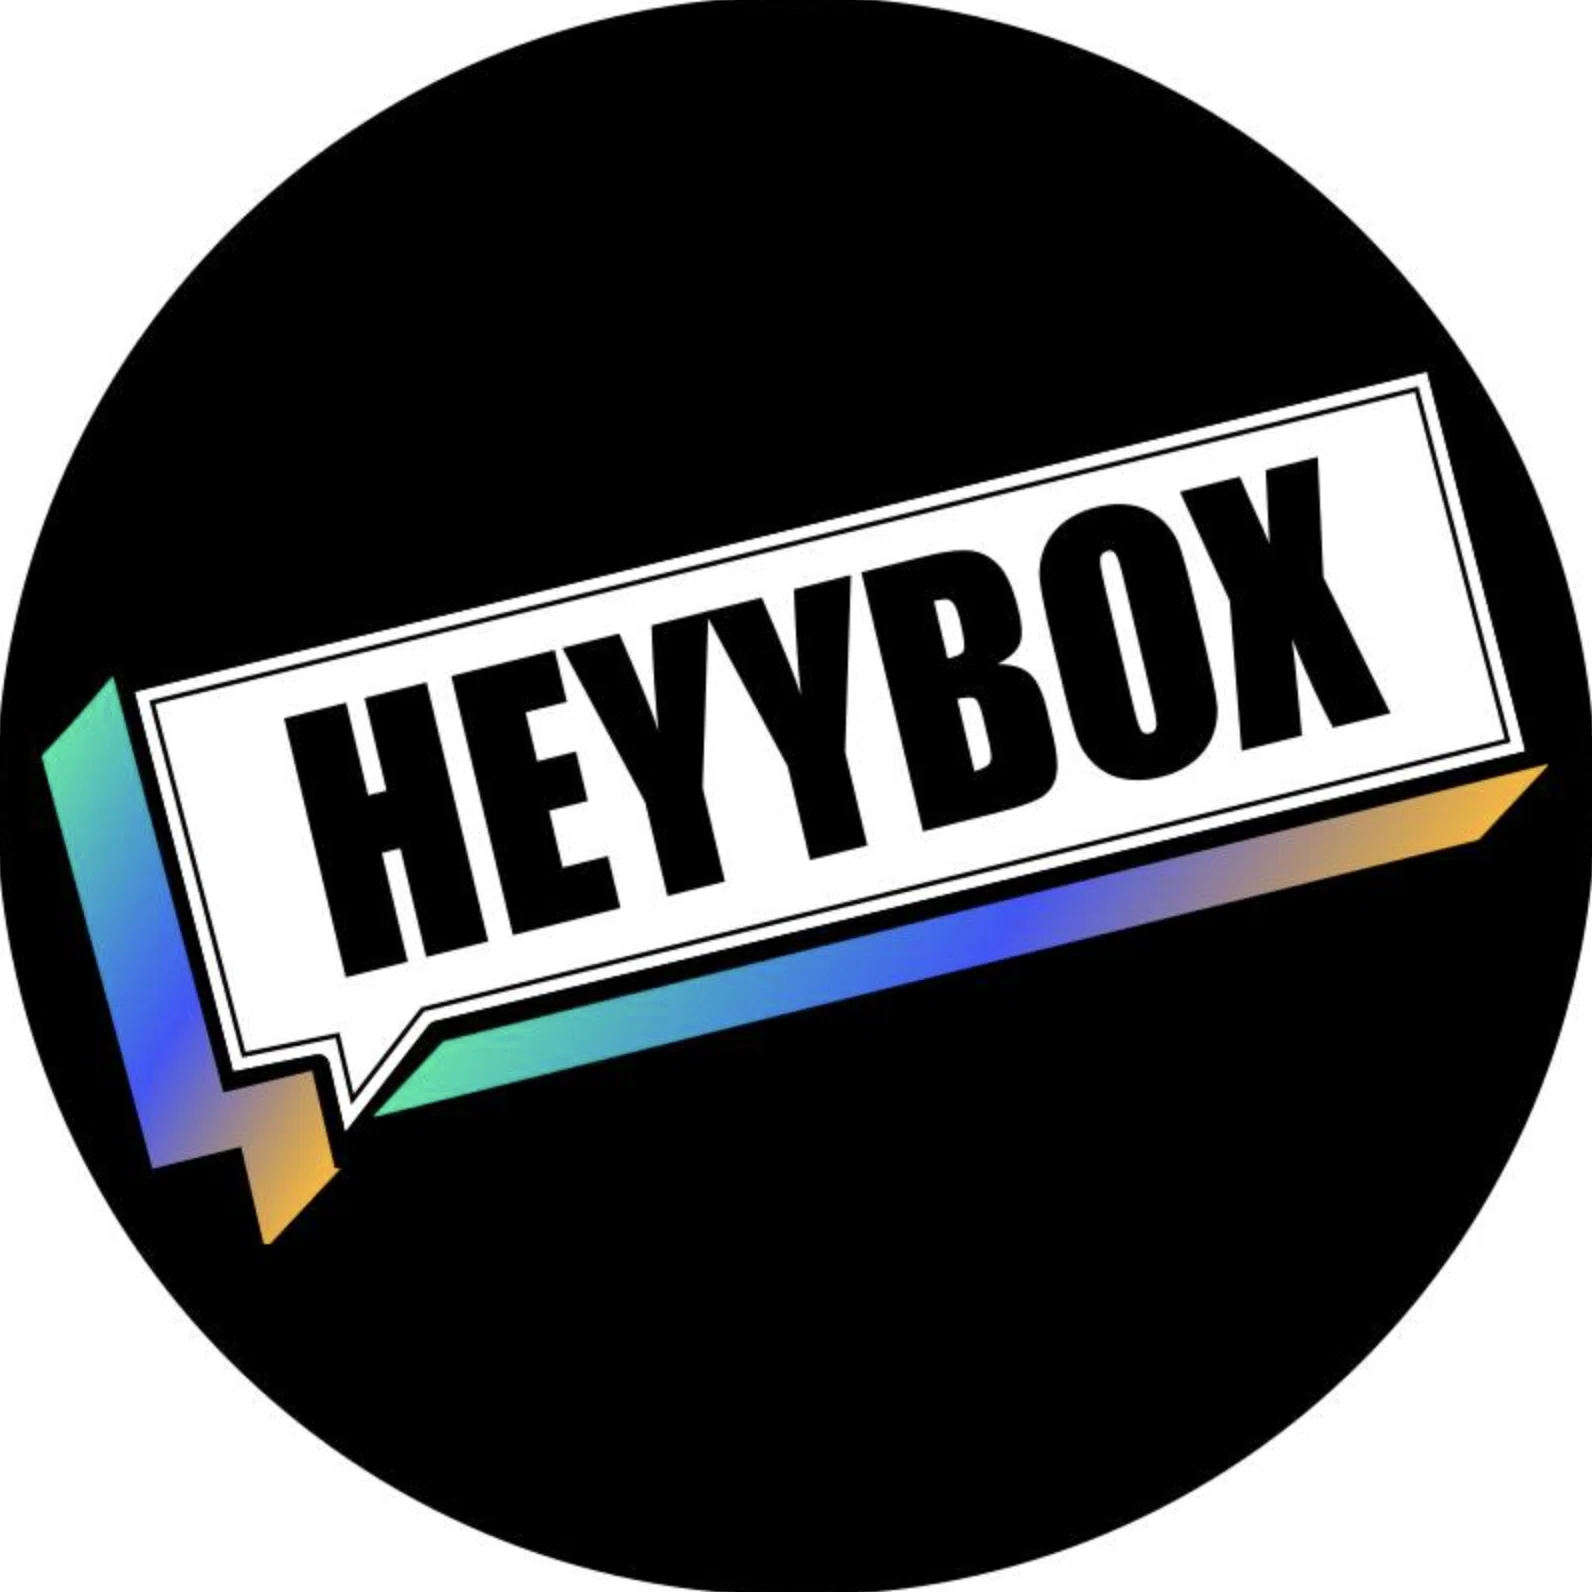 15-off-heyybox-discount-code-coupons-10-active-jan-24